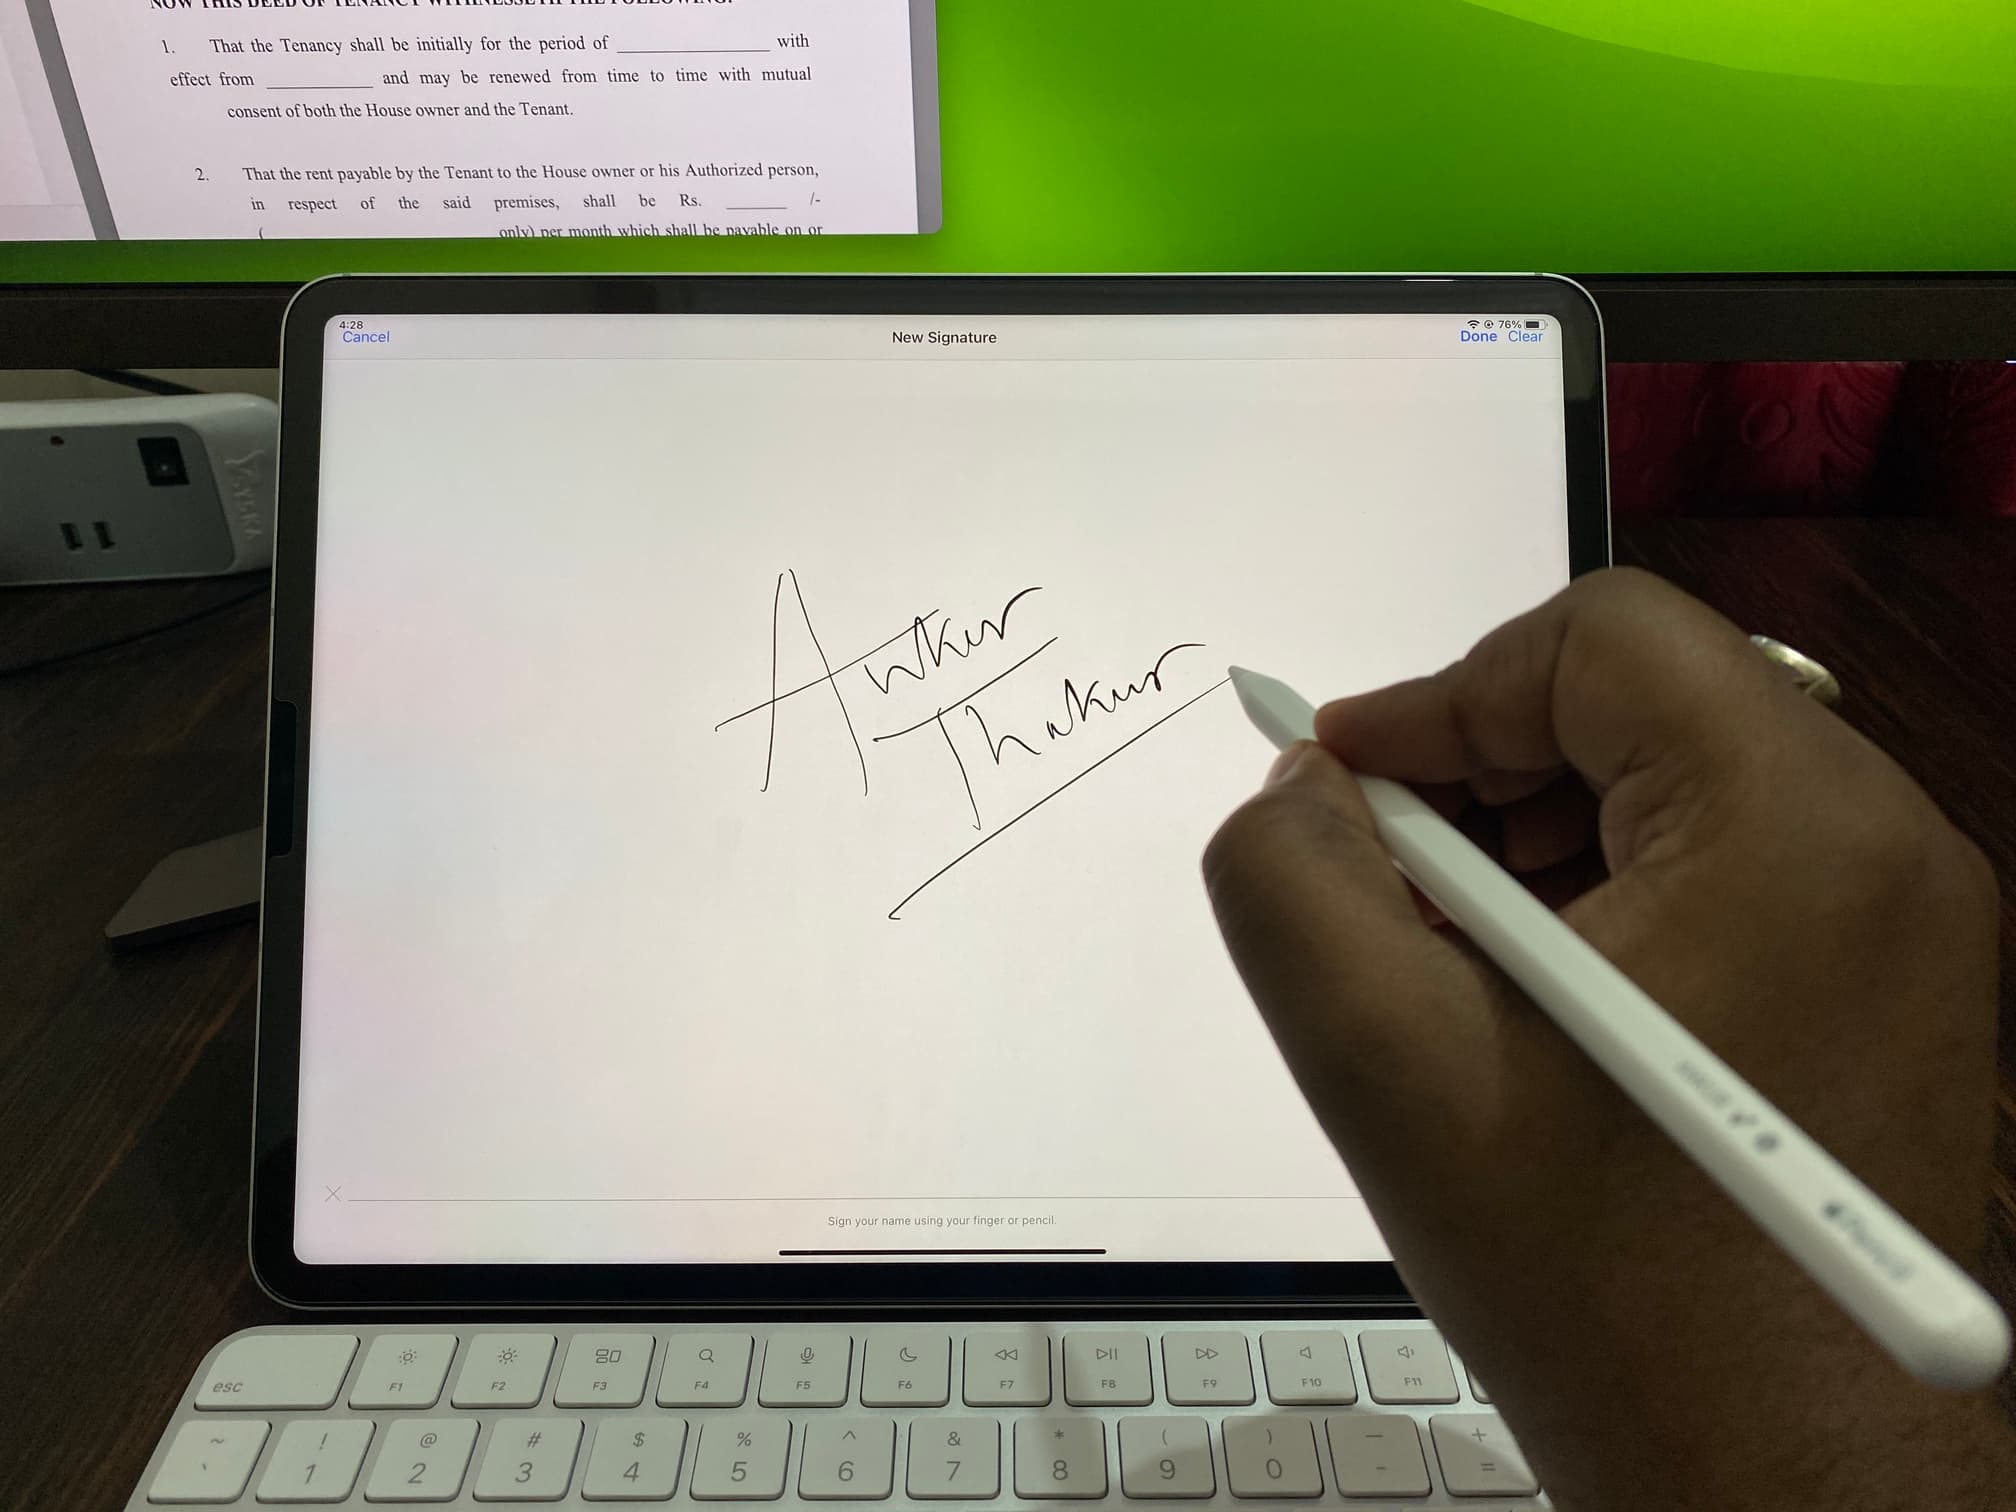 Creating signature for Mac on iPad using Apple Pencil